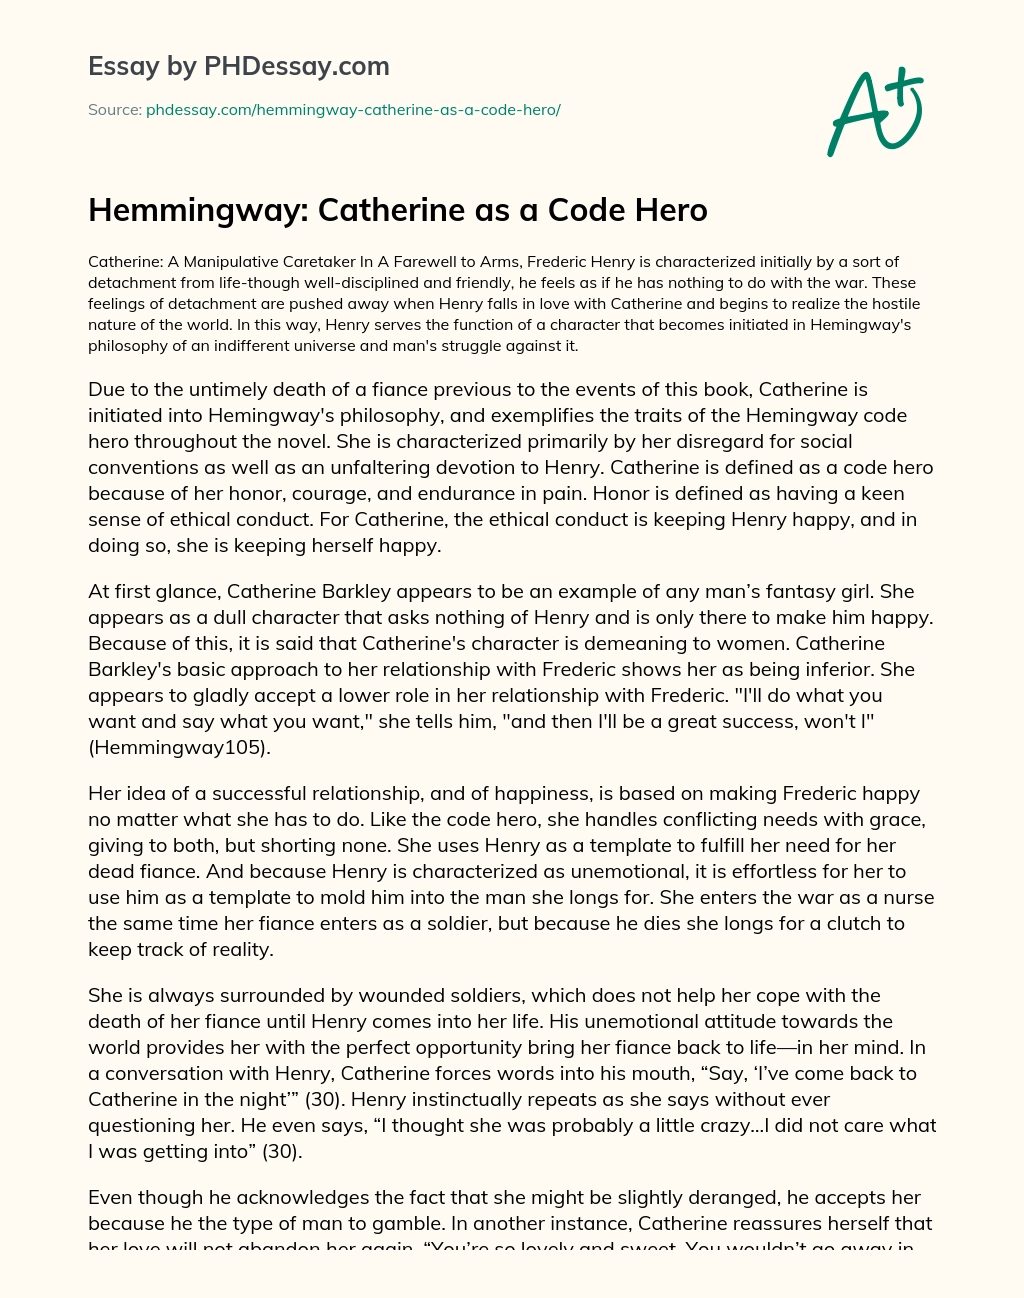 Hemmingway: Catherine as a Code Hero essay